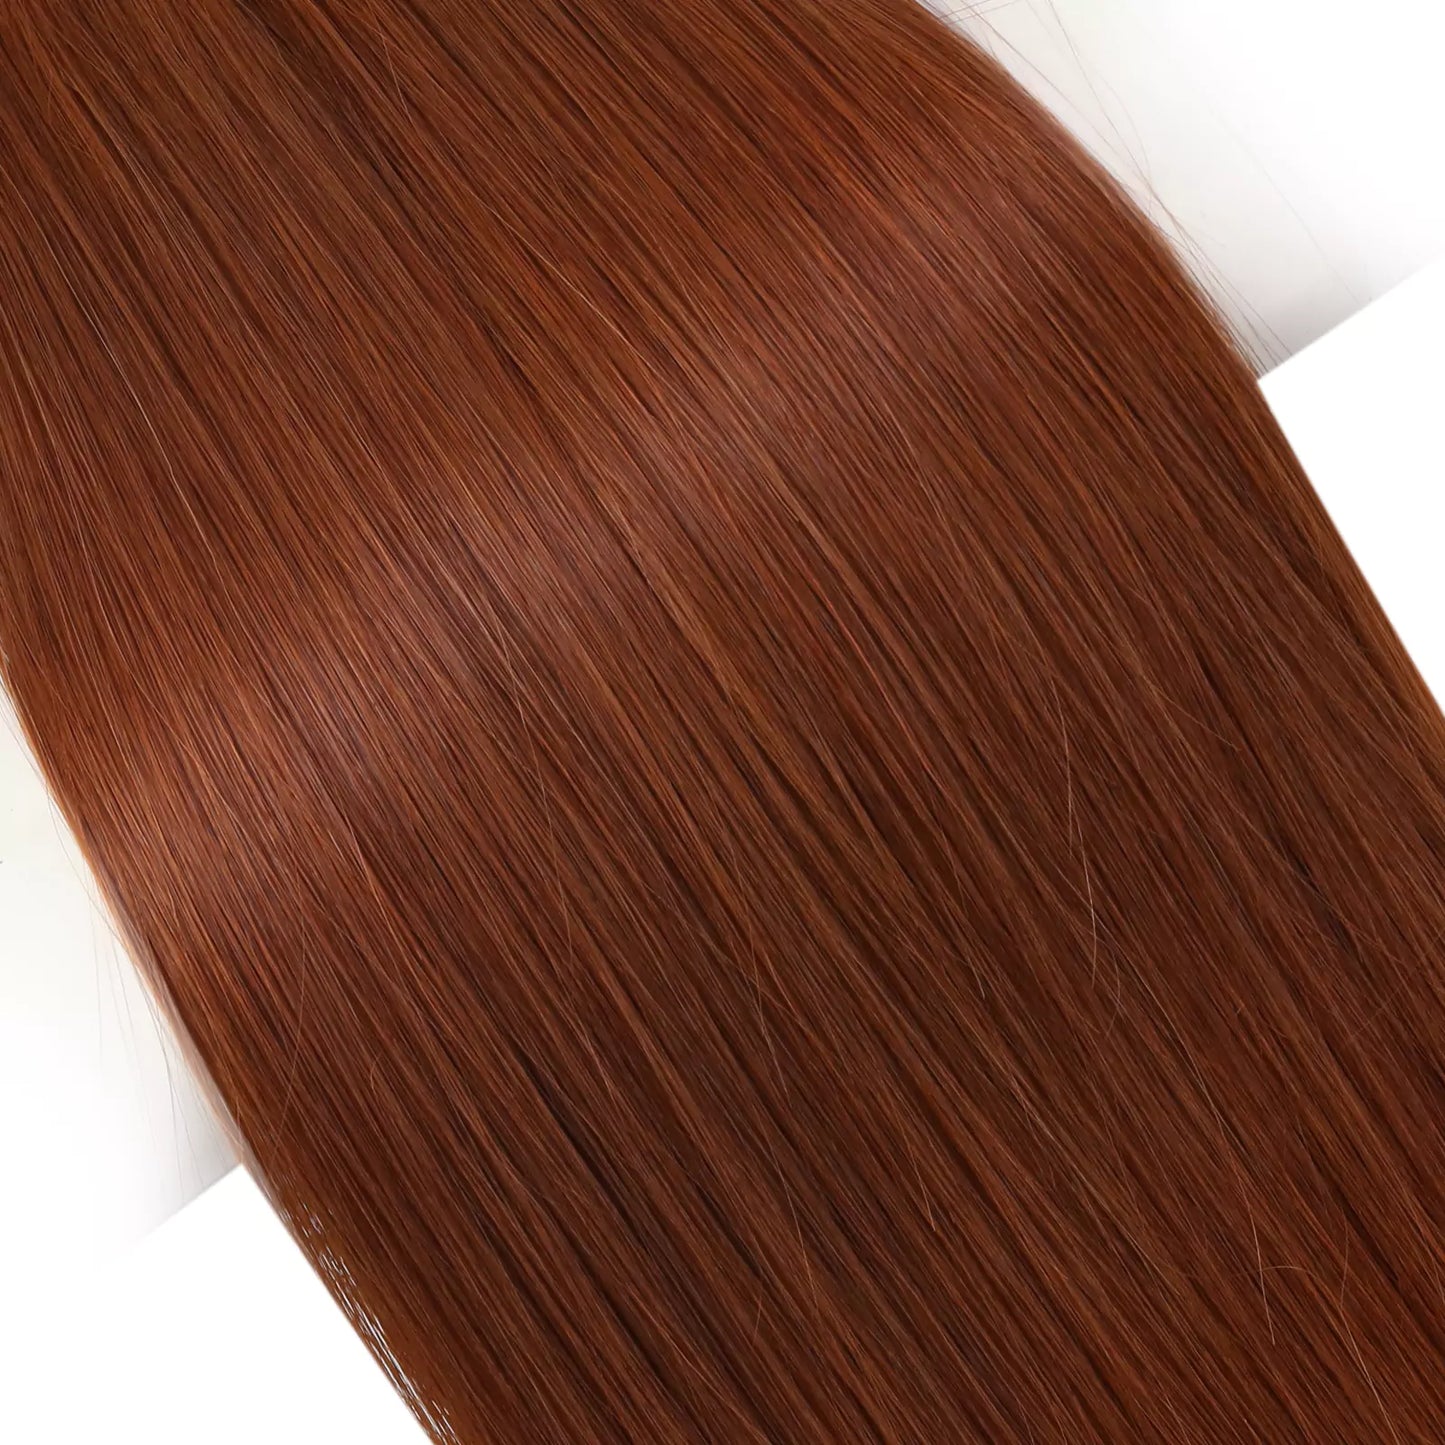 virgin+ hybrid weft copper color genius weft hair extensions